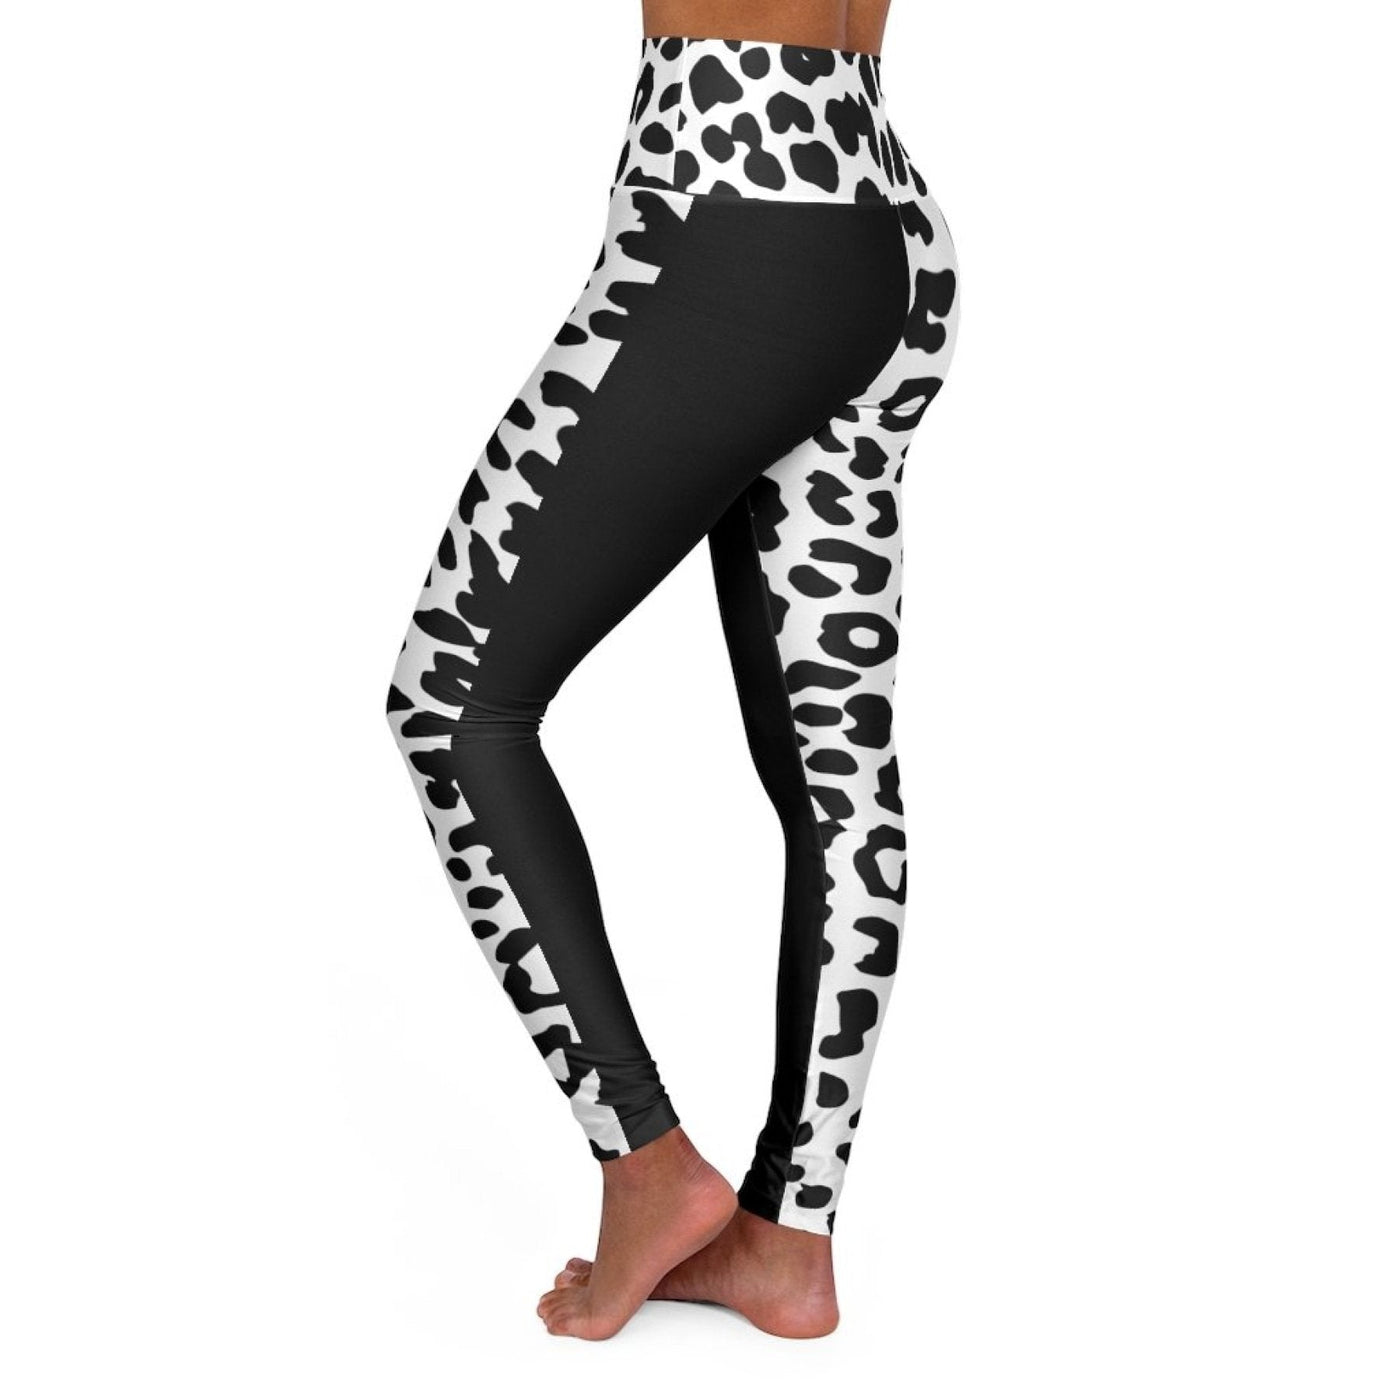 High Waisted Yoga Leggings Black And White Half-tone Leopard Style Pants -